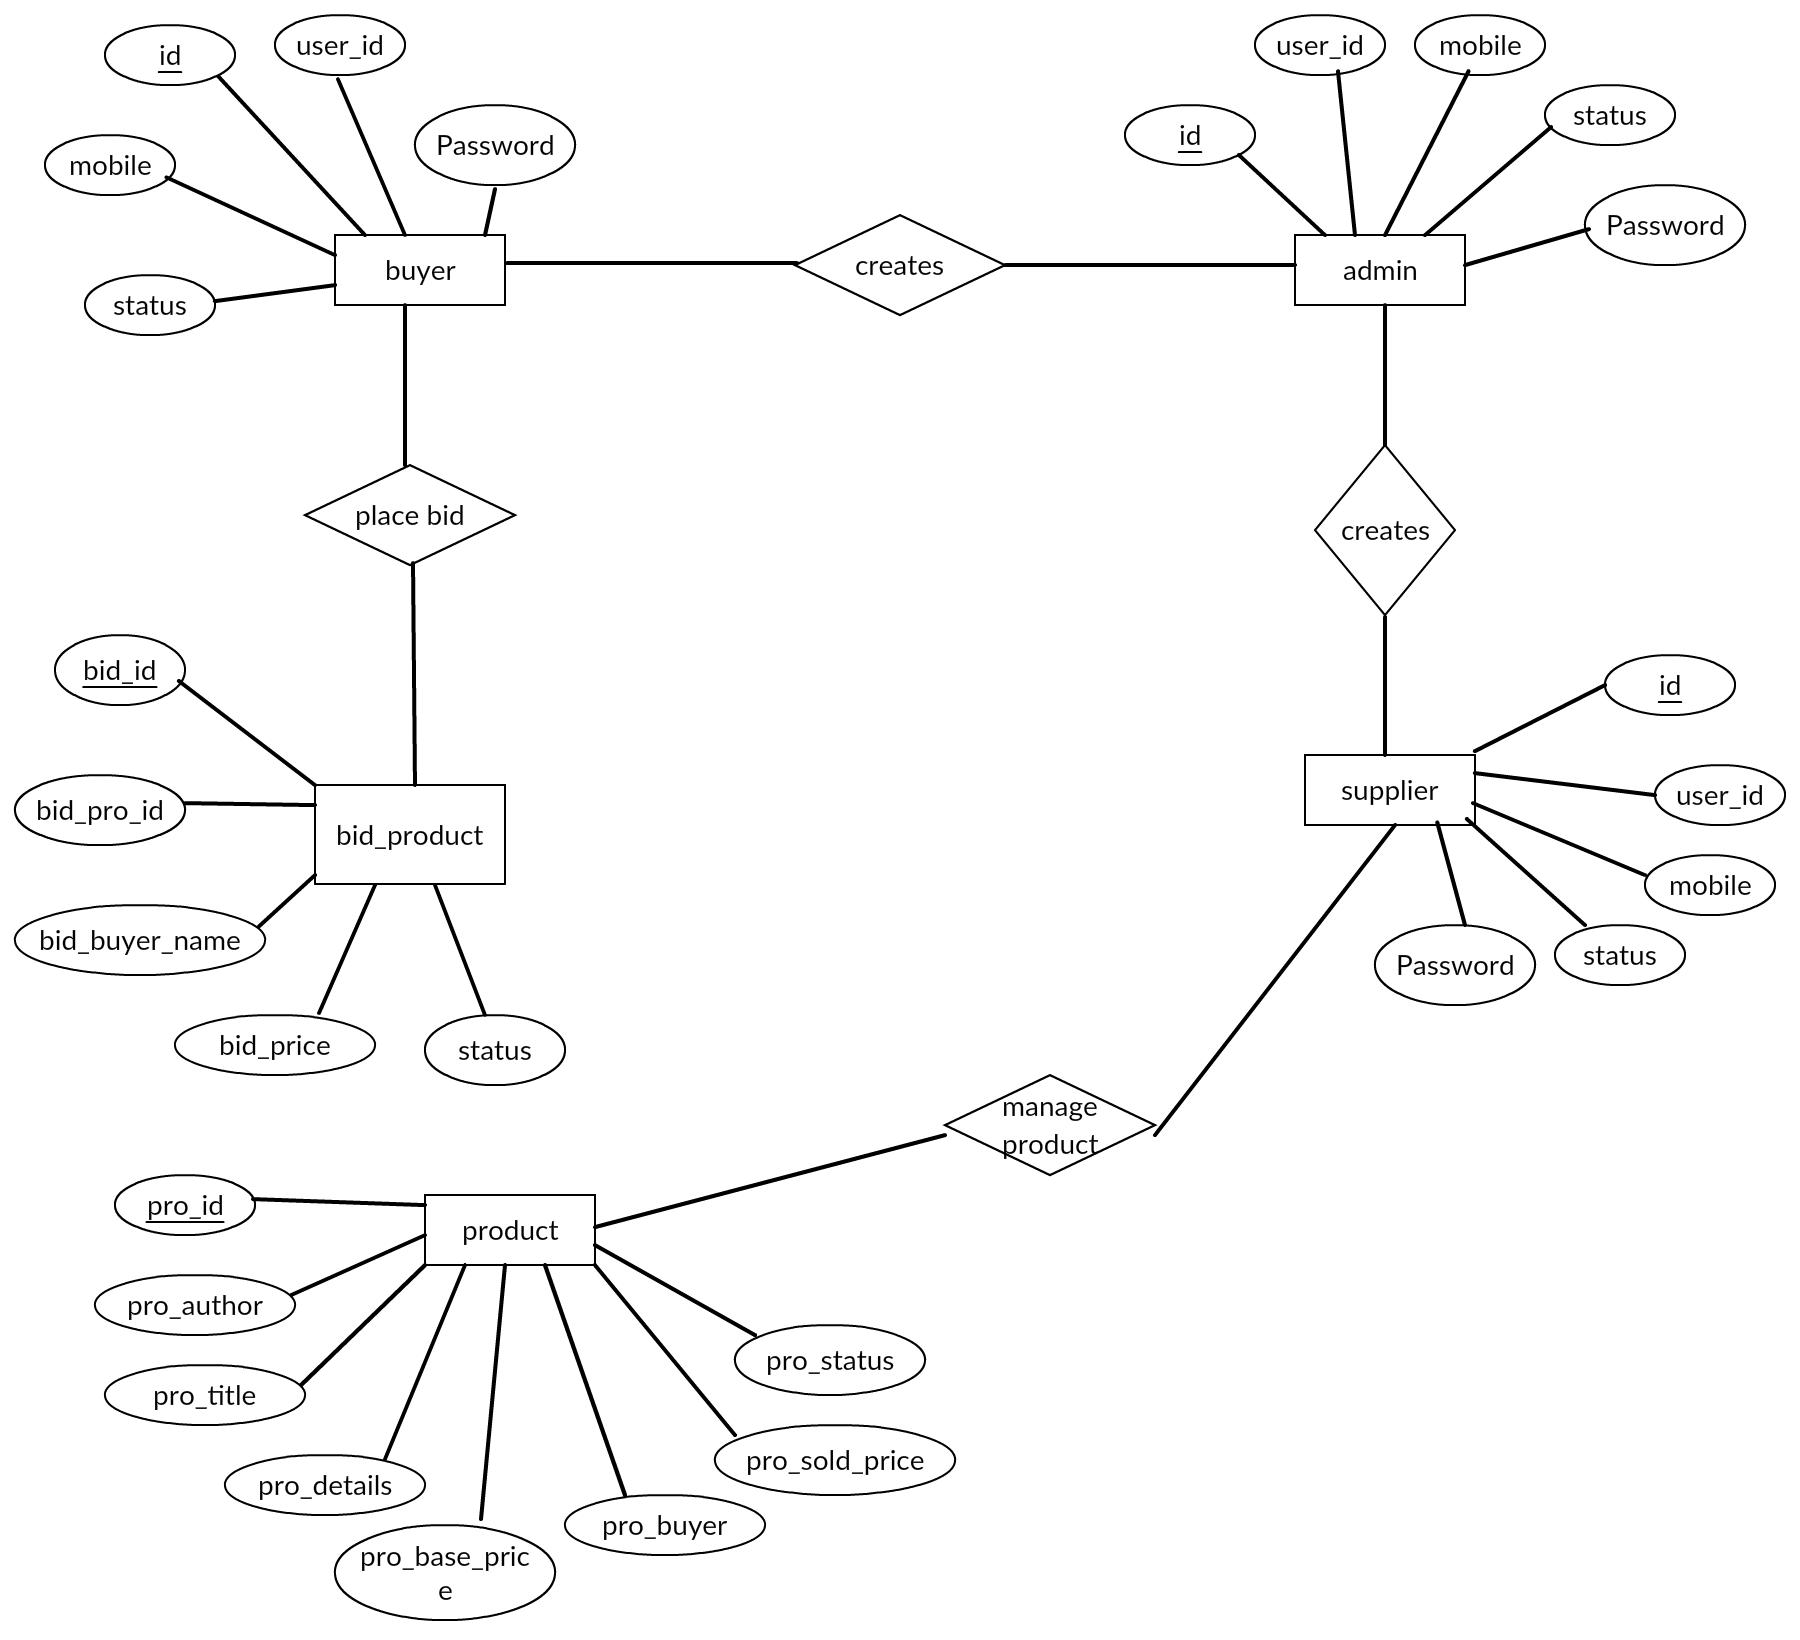 Entity Relationship Diagram (Er Diagram) Of A Auction System